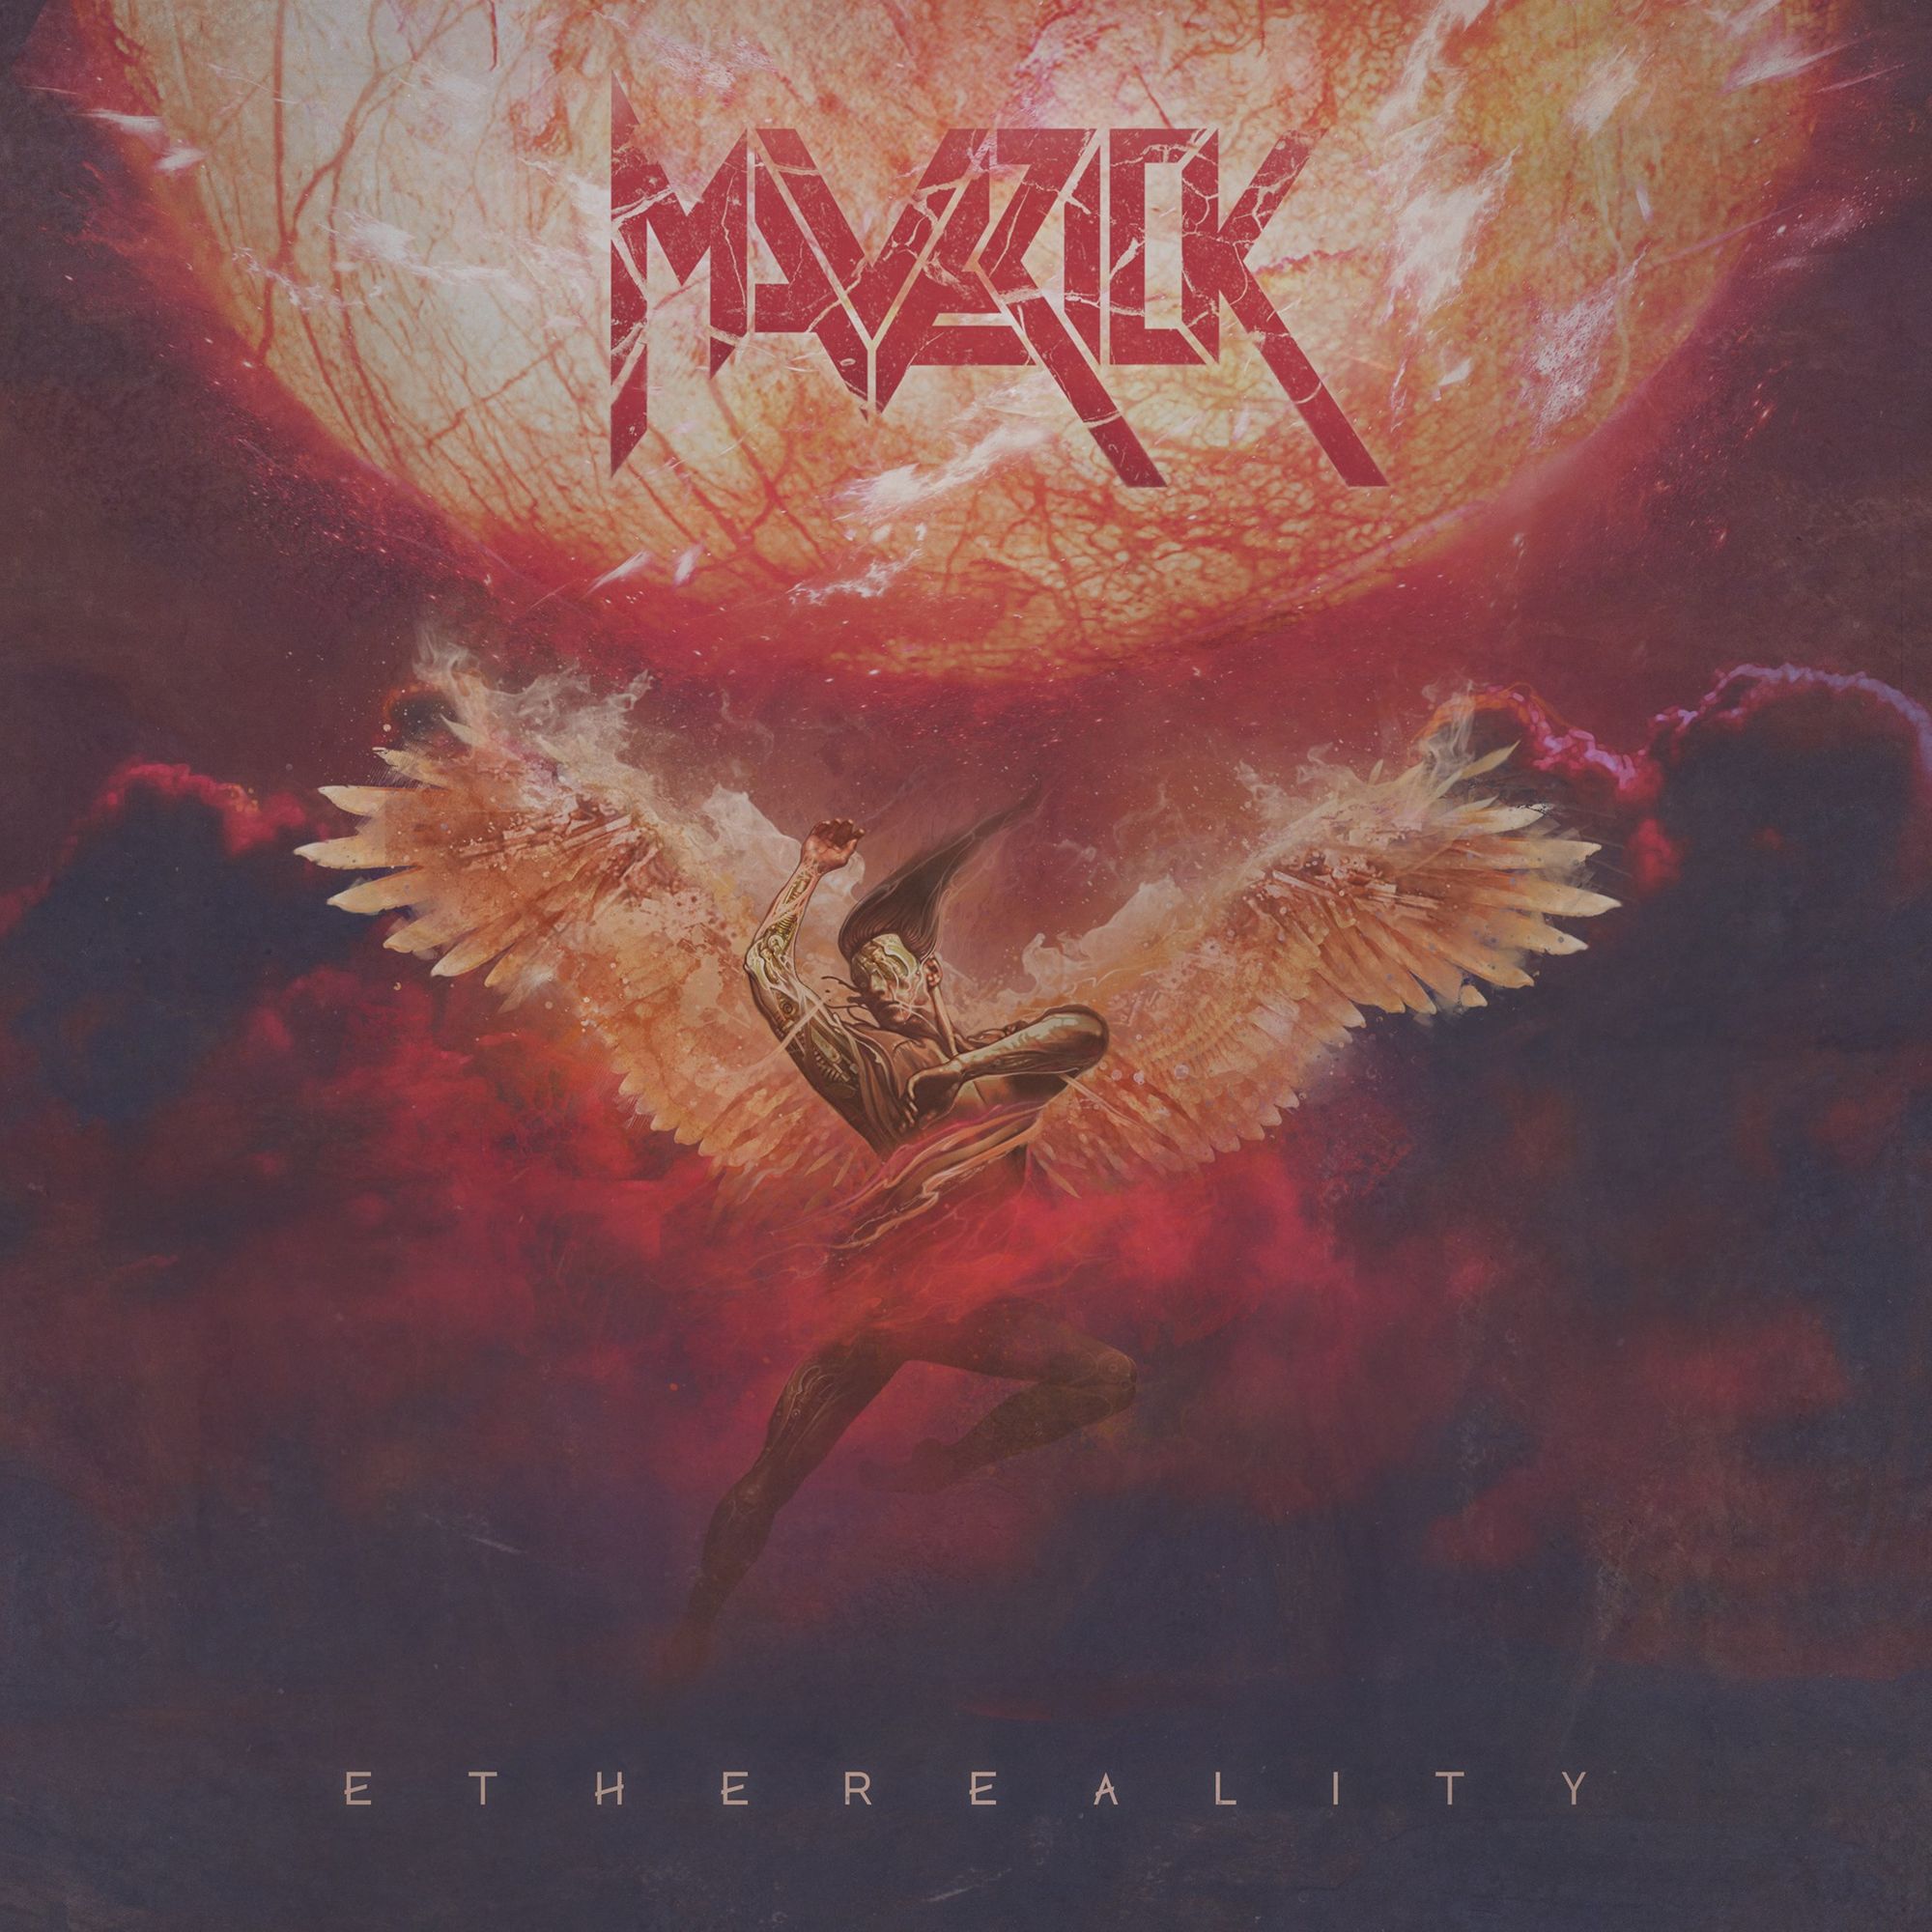 Maverick (Heavy Metal)